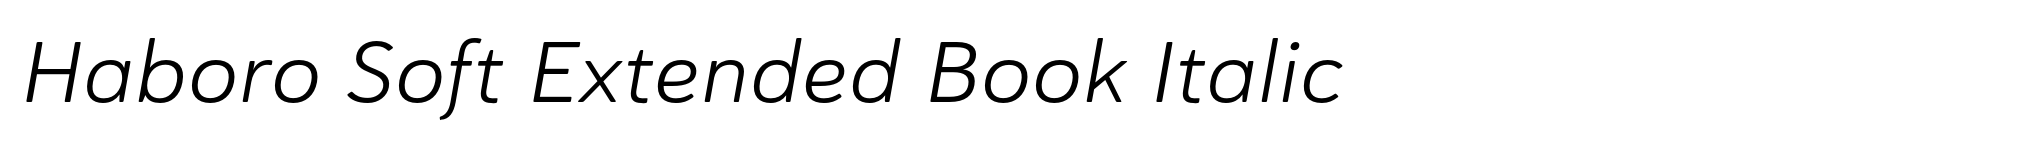 Haboro Soft Extended Book Italic image